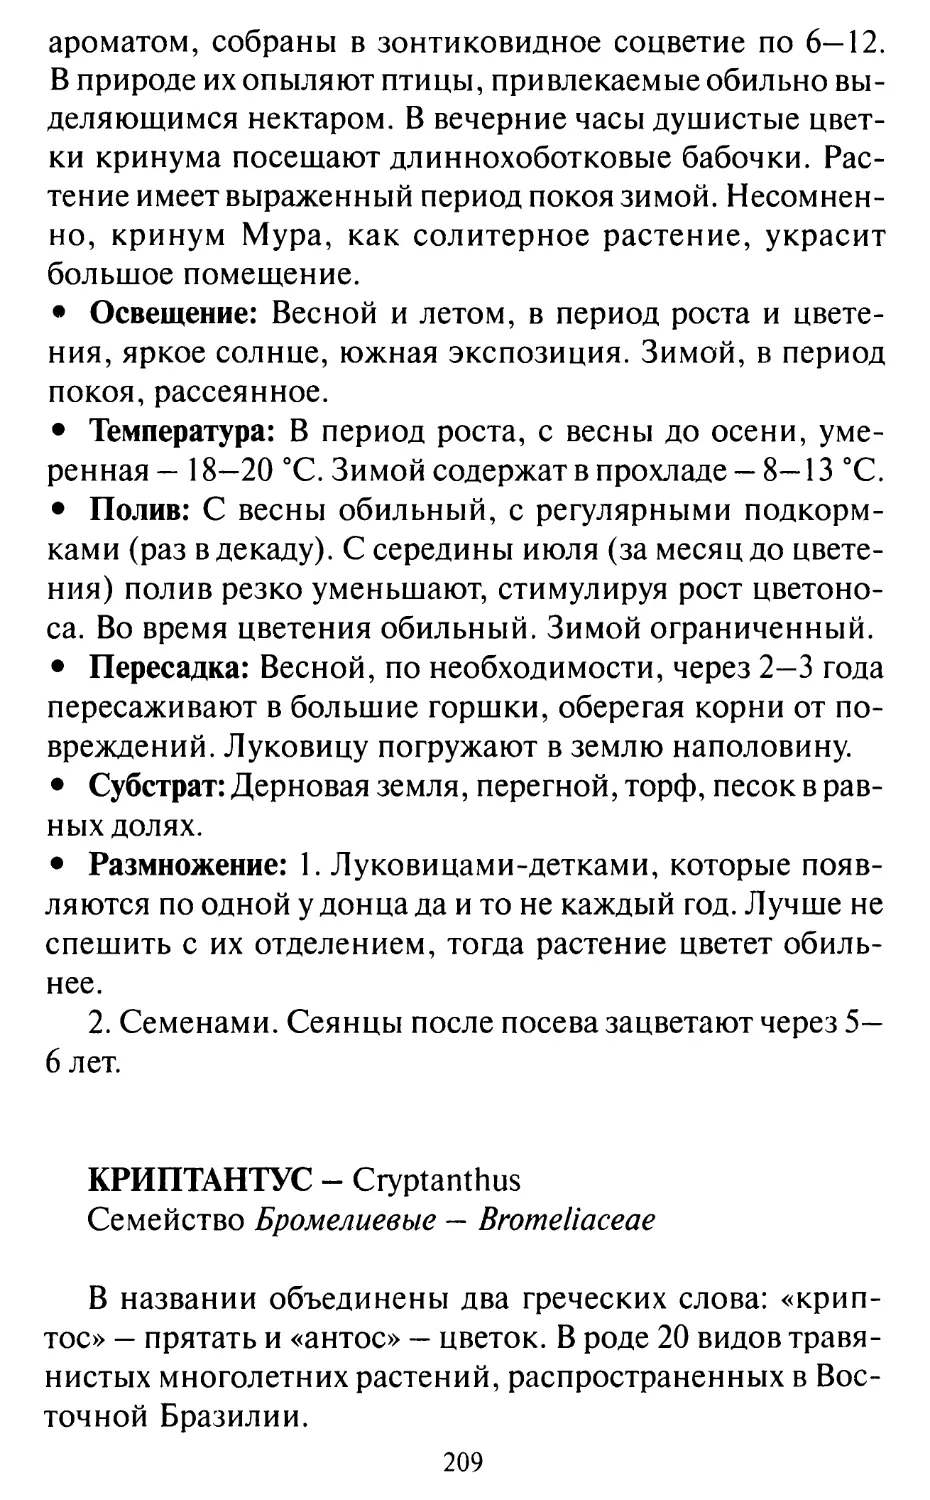 Криптантус — Cryptanthus